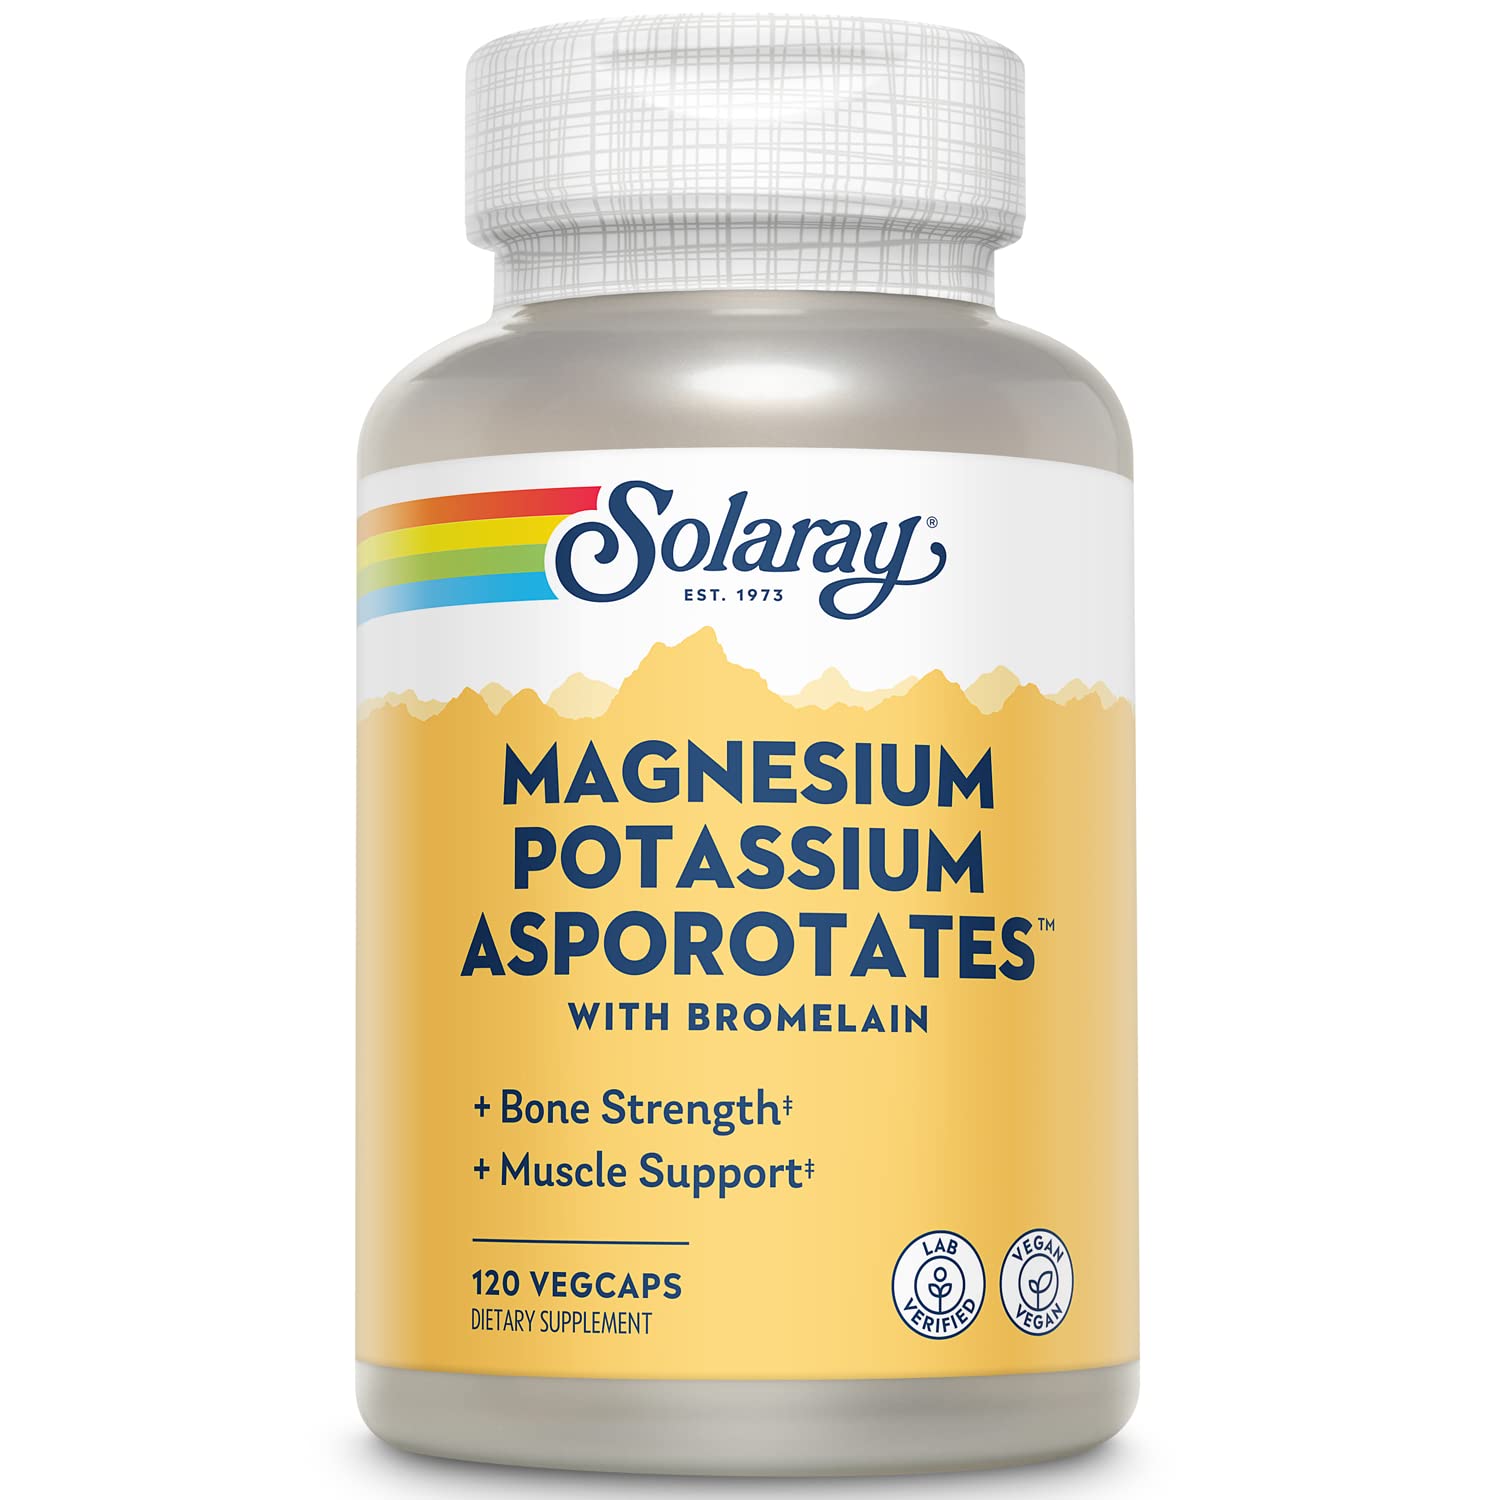 Solaray Magnesium and Potassium Asporotates w/ Bromelain | Healthy Electrolyte, Muscle, Heart & Cellular Support | 60 Servings | 120 VegCaps